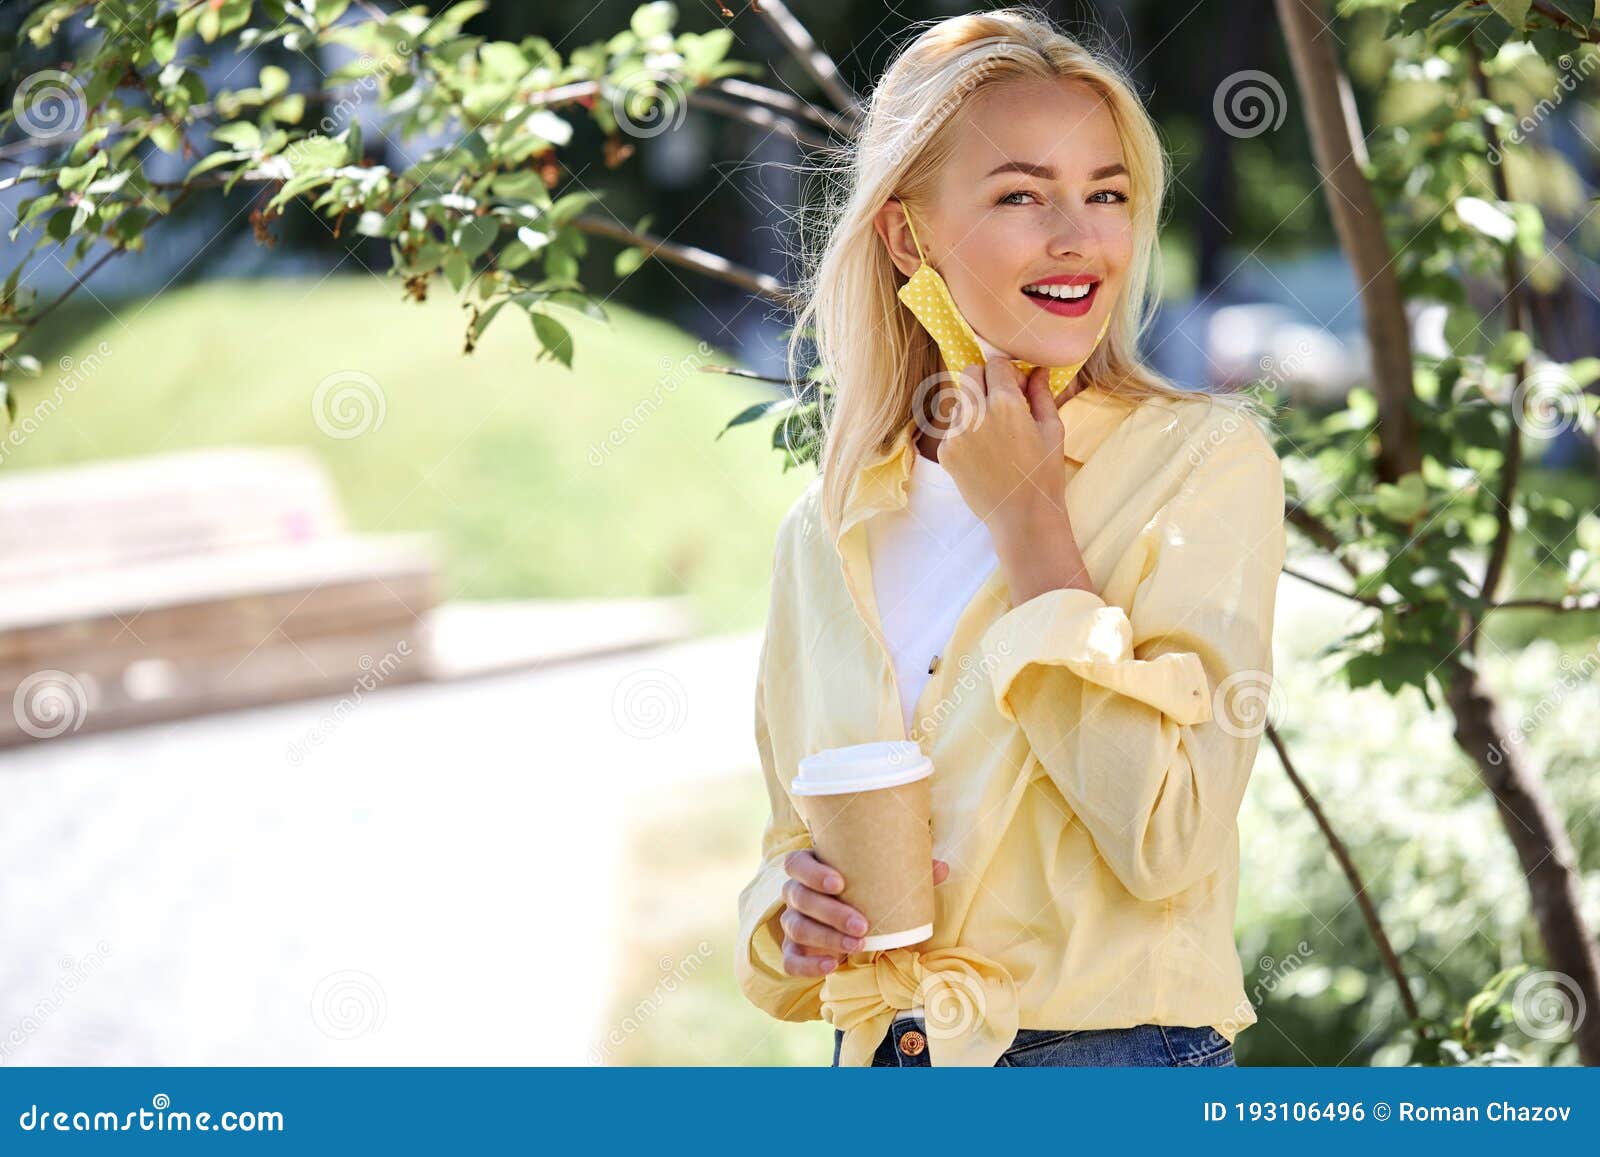 charming happy woman enjoys sunny day